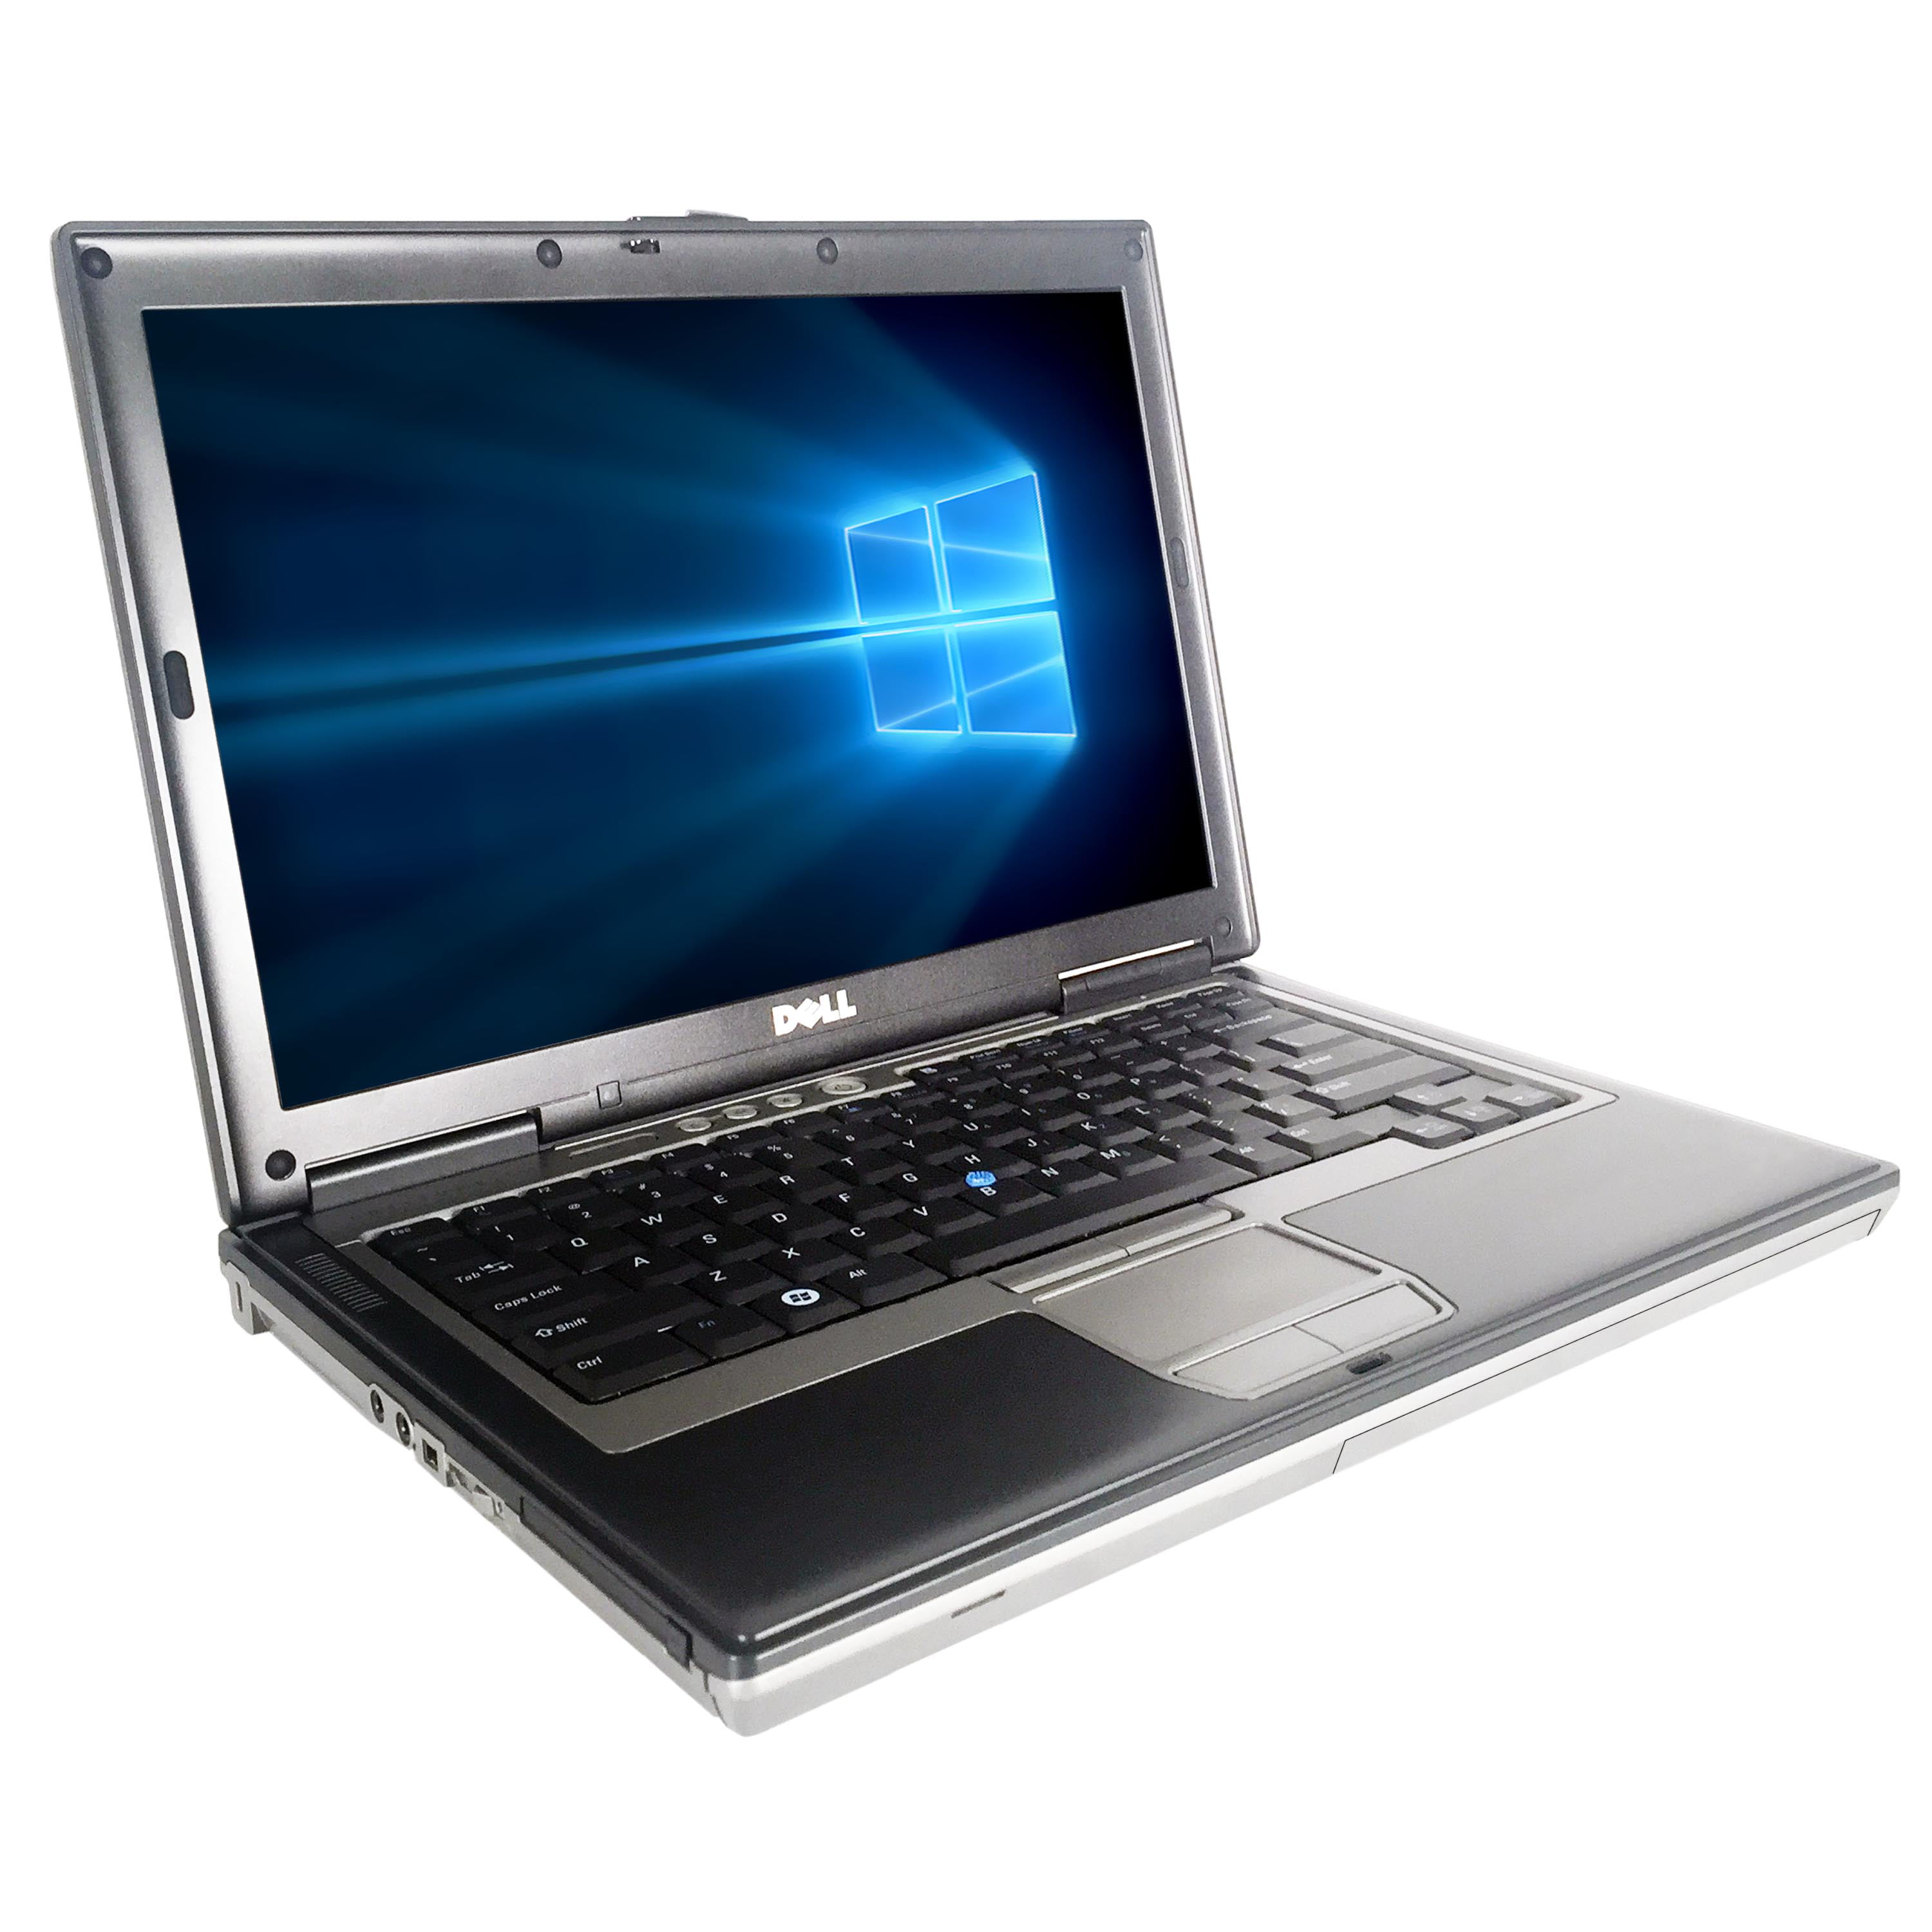 Dell Latitude D630 14.1" TFT Laptop Intel C2D 1.8GHZ 3G RAM 64G SSD DVD